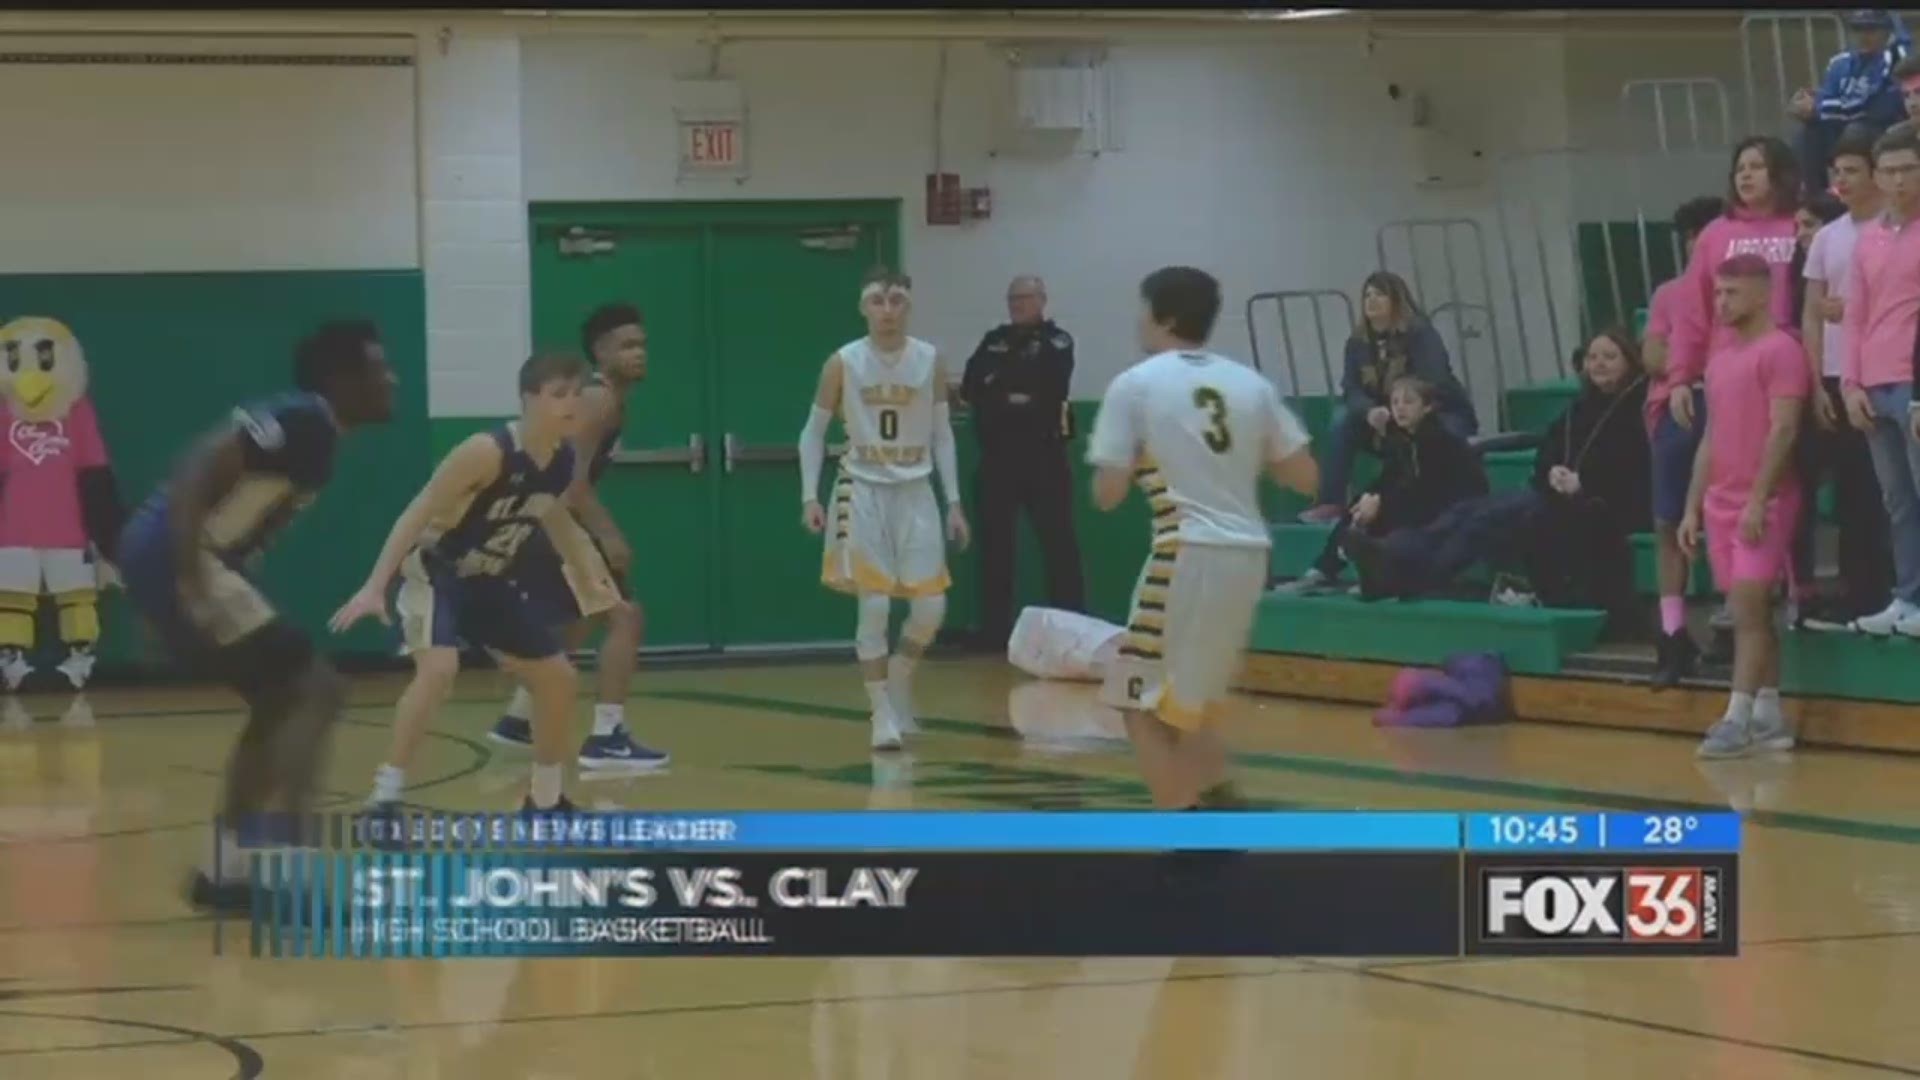 Feb. 9 High school Basketball: SJJ vs. Clay